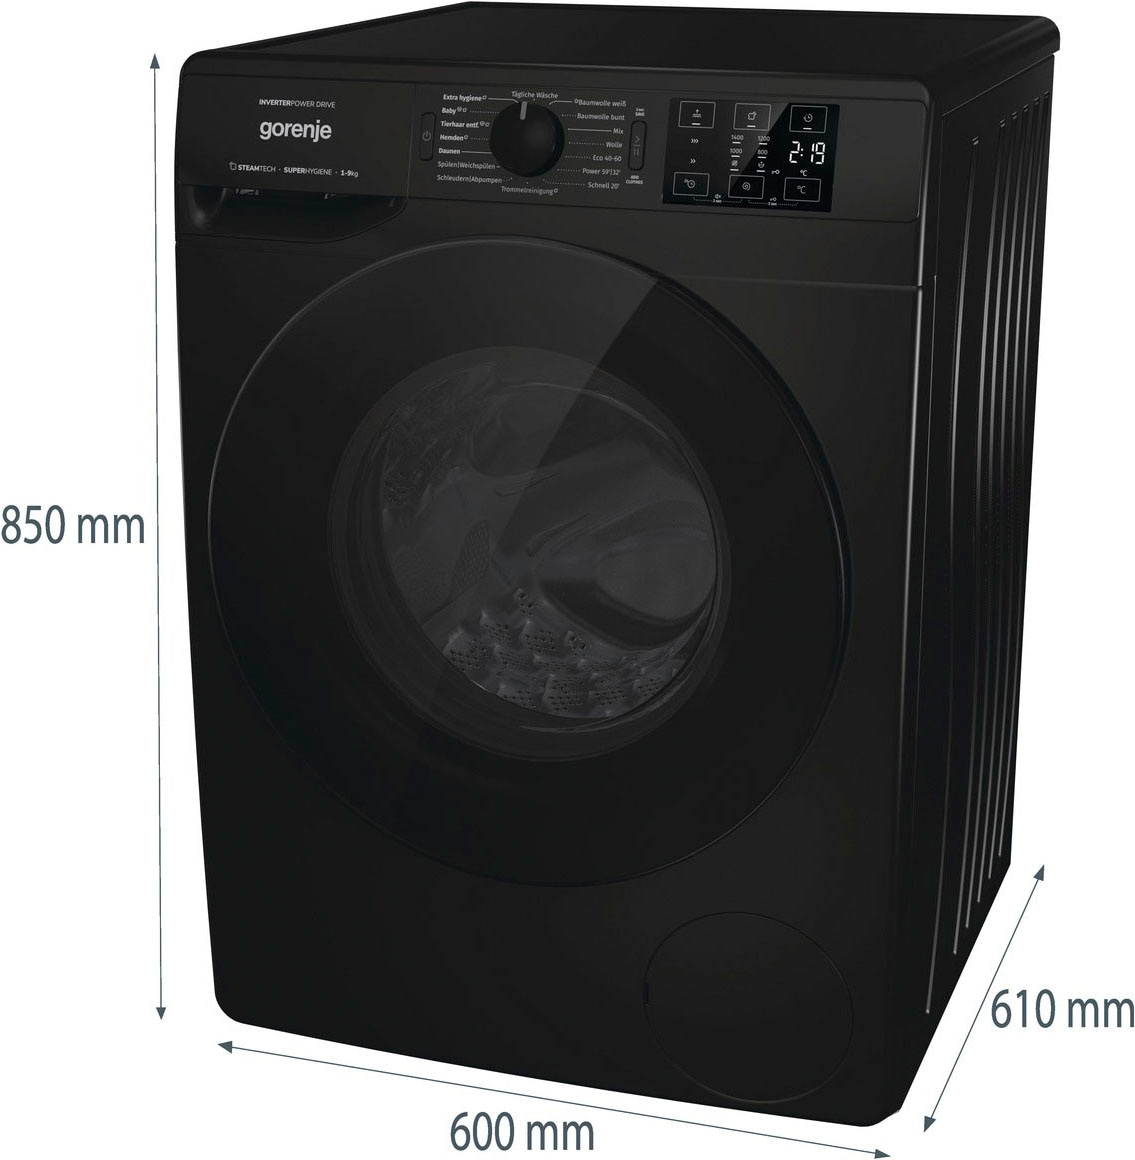 Waschmaschine | U/min BAUR 94 kg, GORENJE kaufen 9 ADPSB«, ADPSB, 94 »WNFHEI WNFHEI 1400